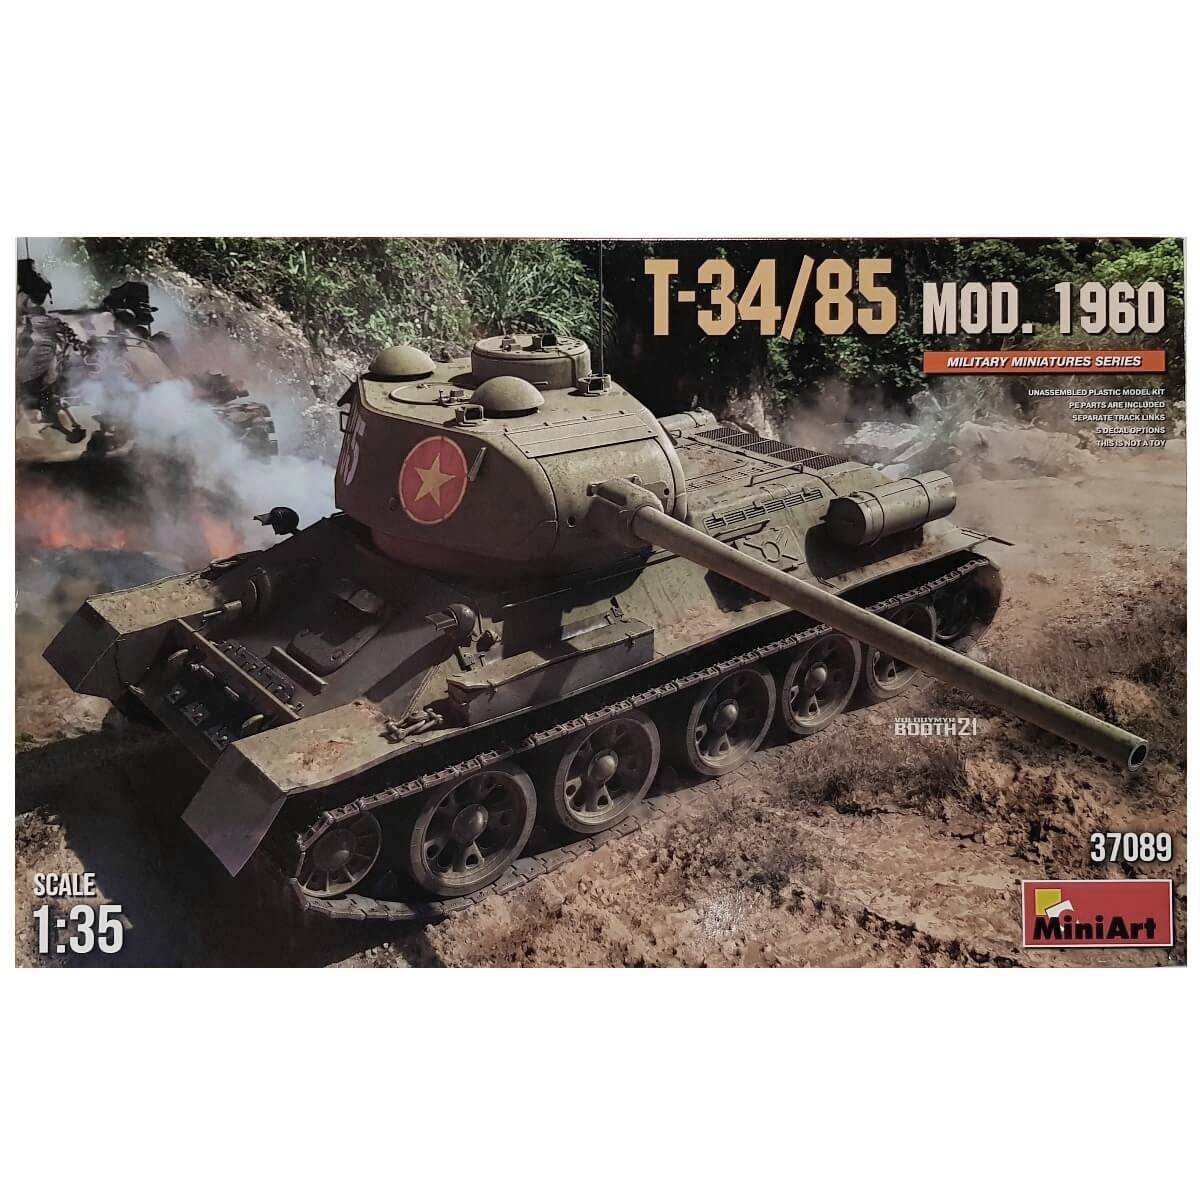 1:35 T-34/85 Mod. 1960 - MINIART – one35scale